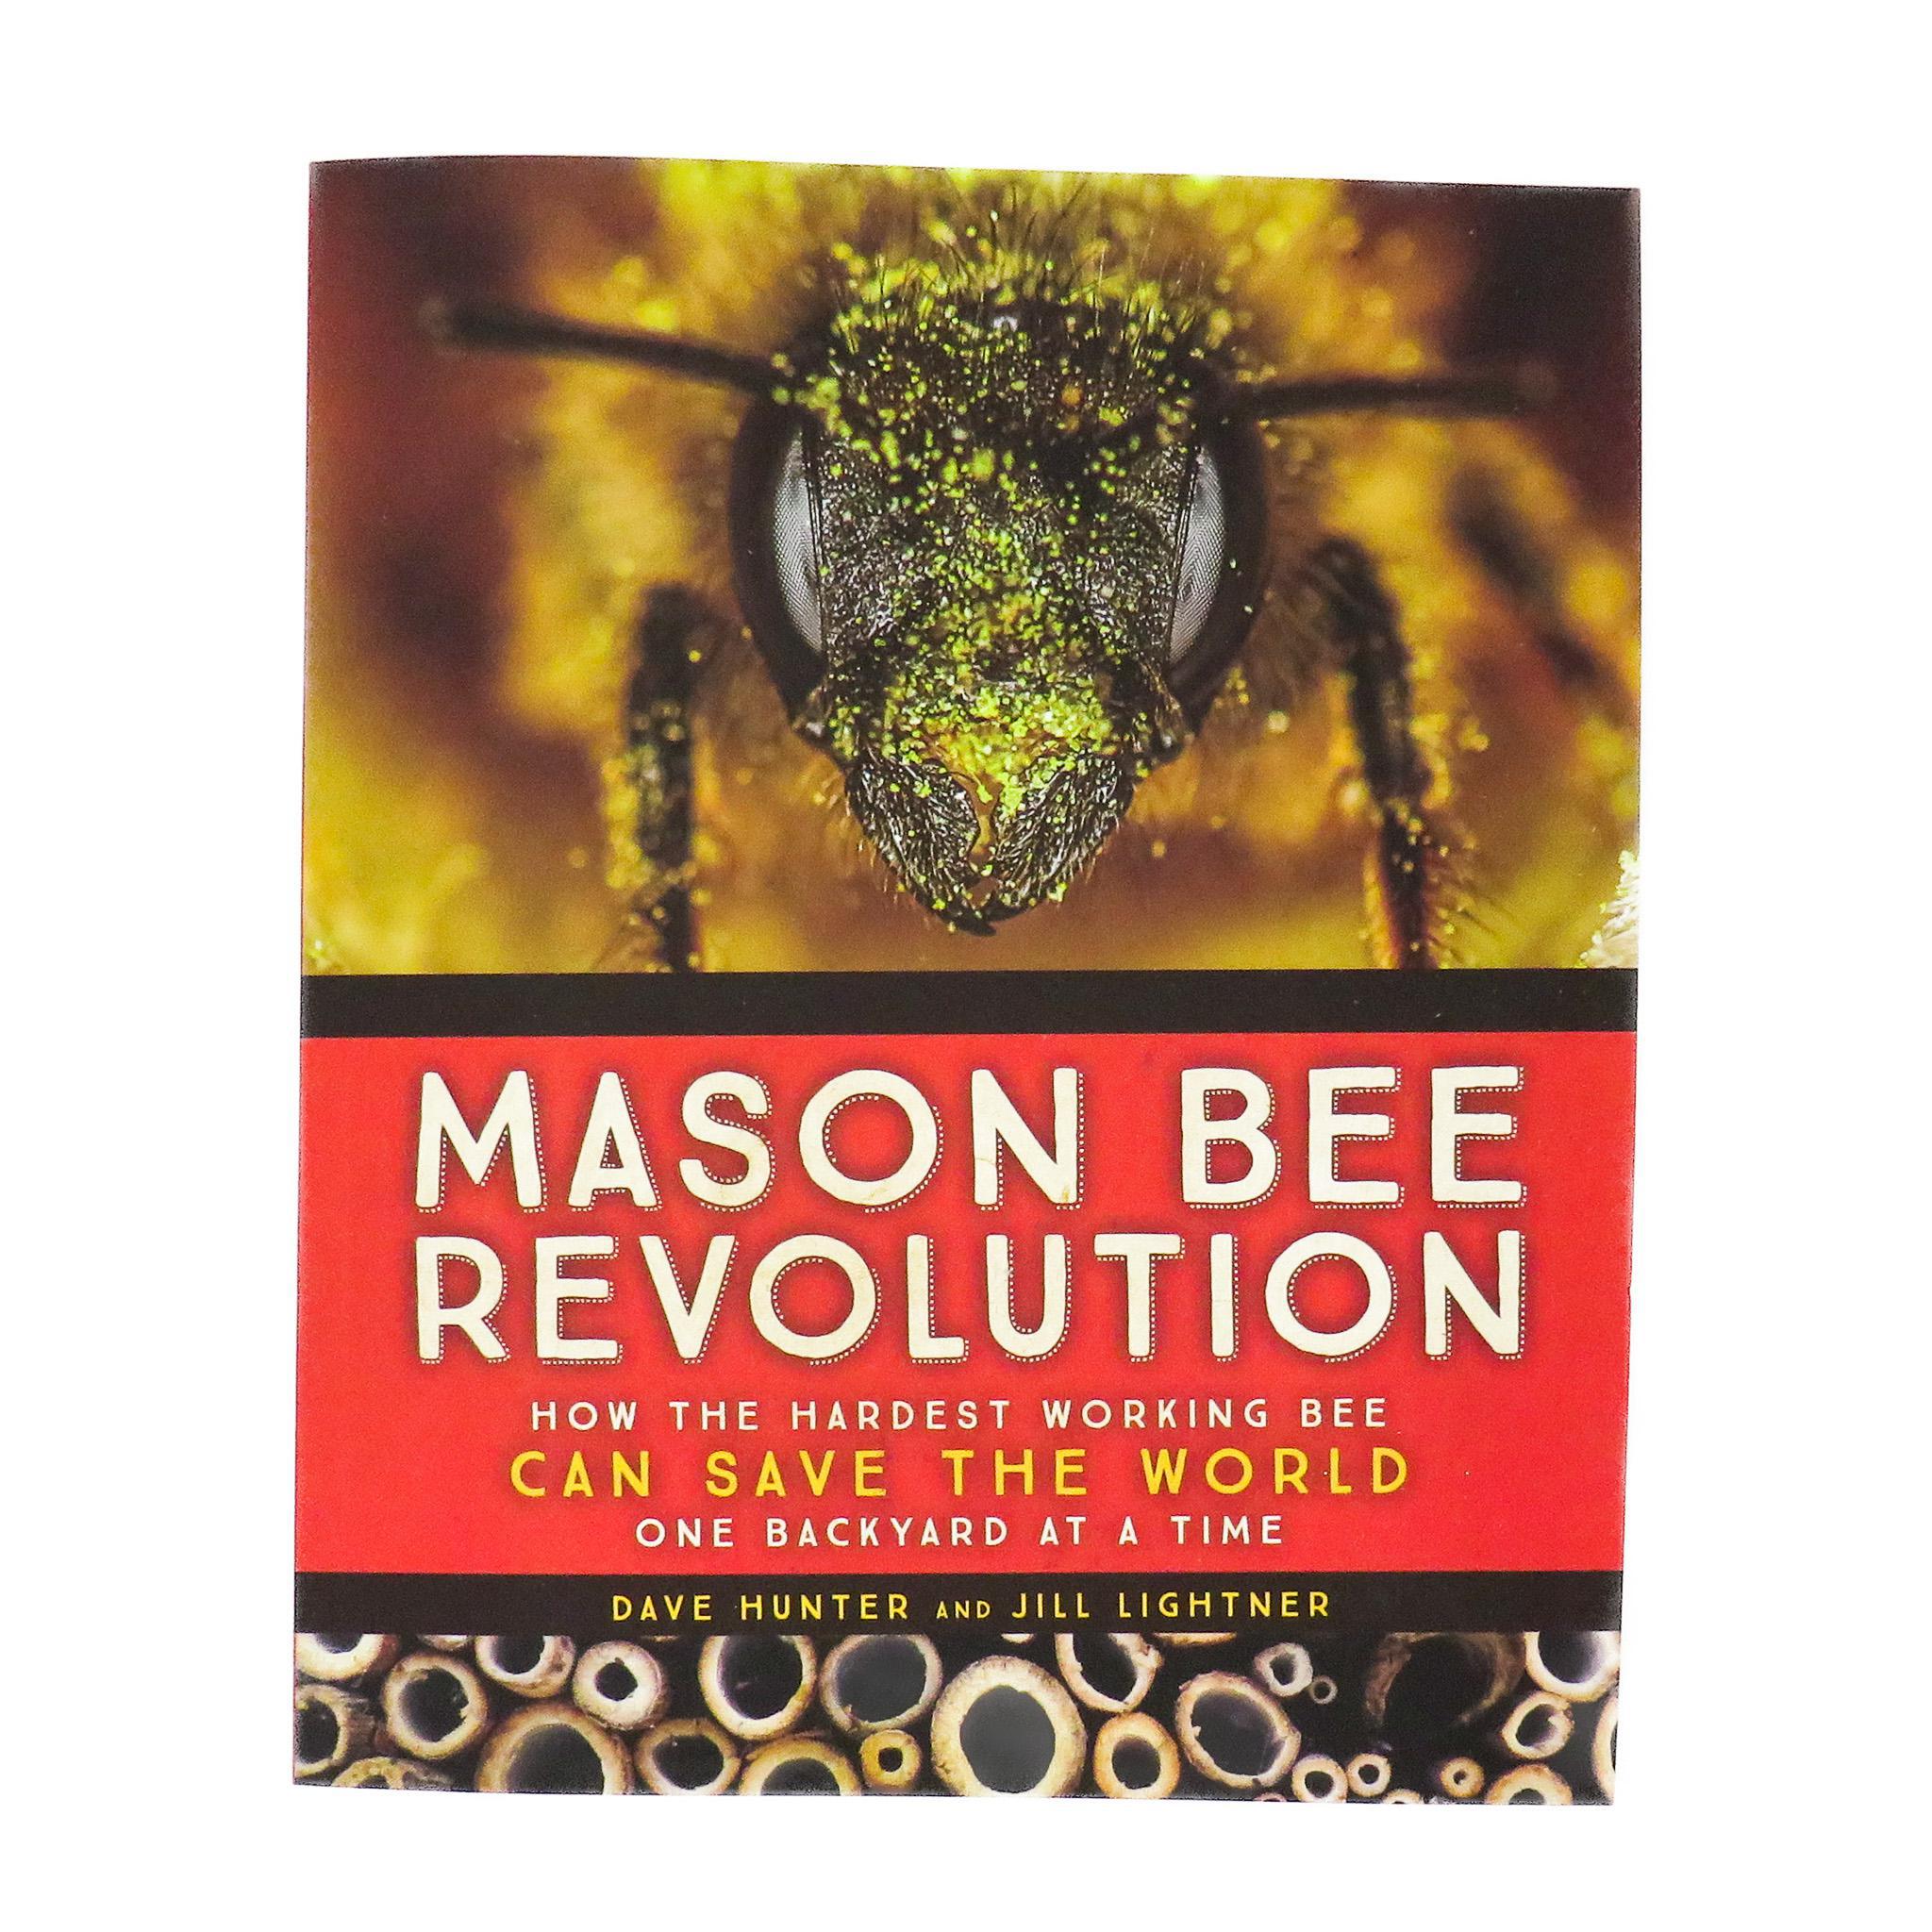  'Mason Bee Revolution.' Book written by Dave Hunter